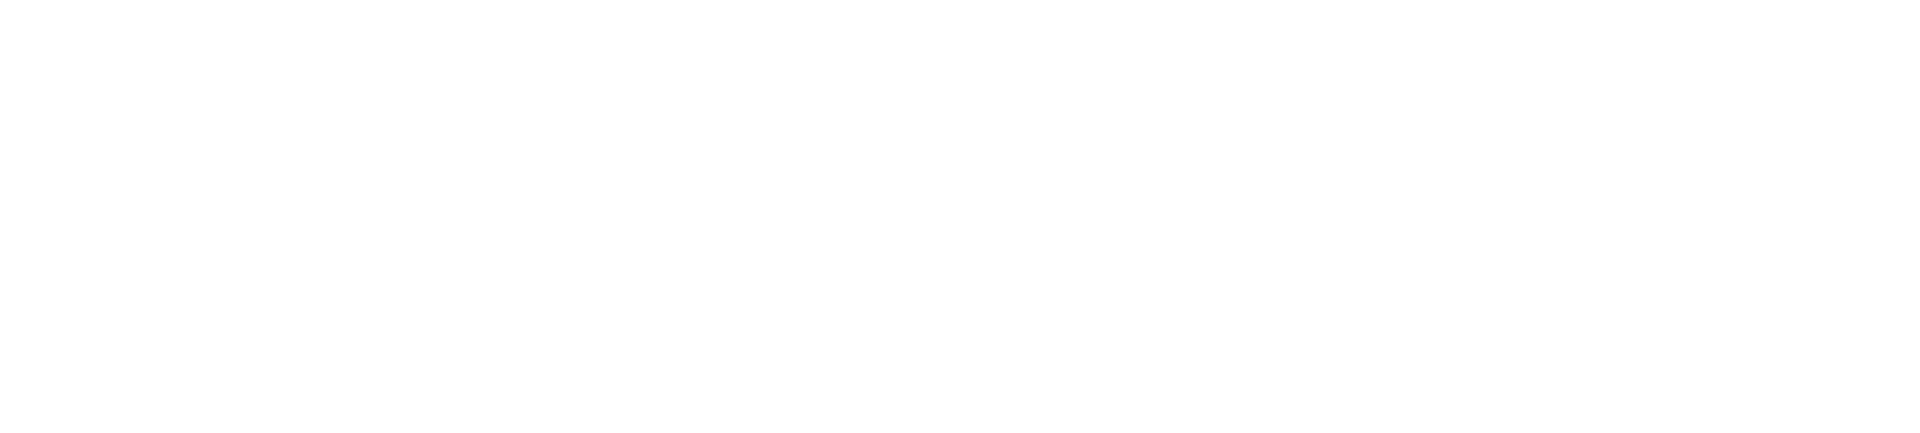 Liebl & Frank GmbH logo